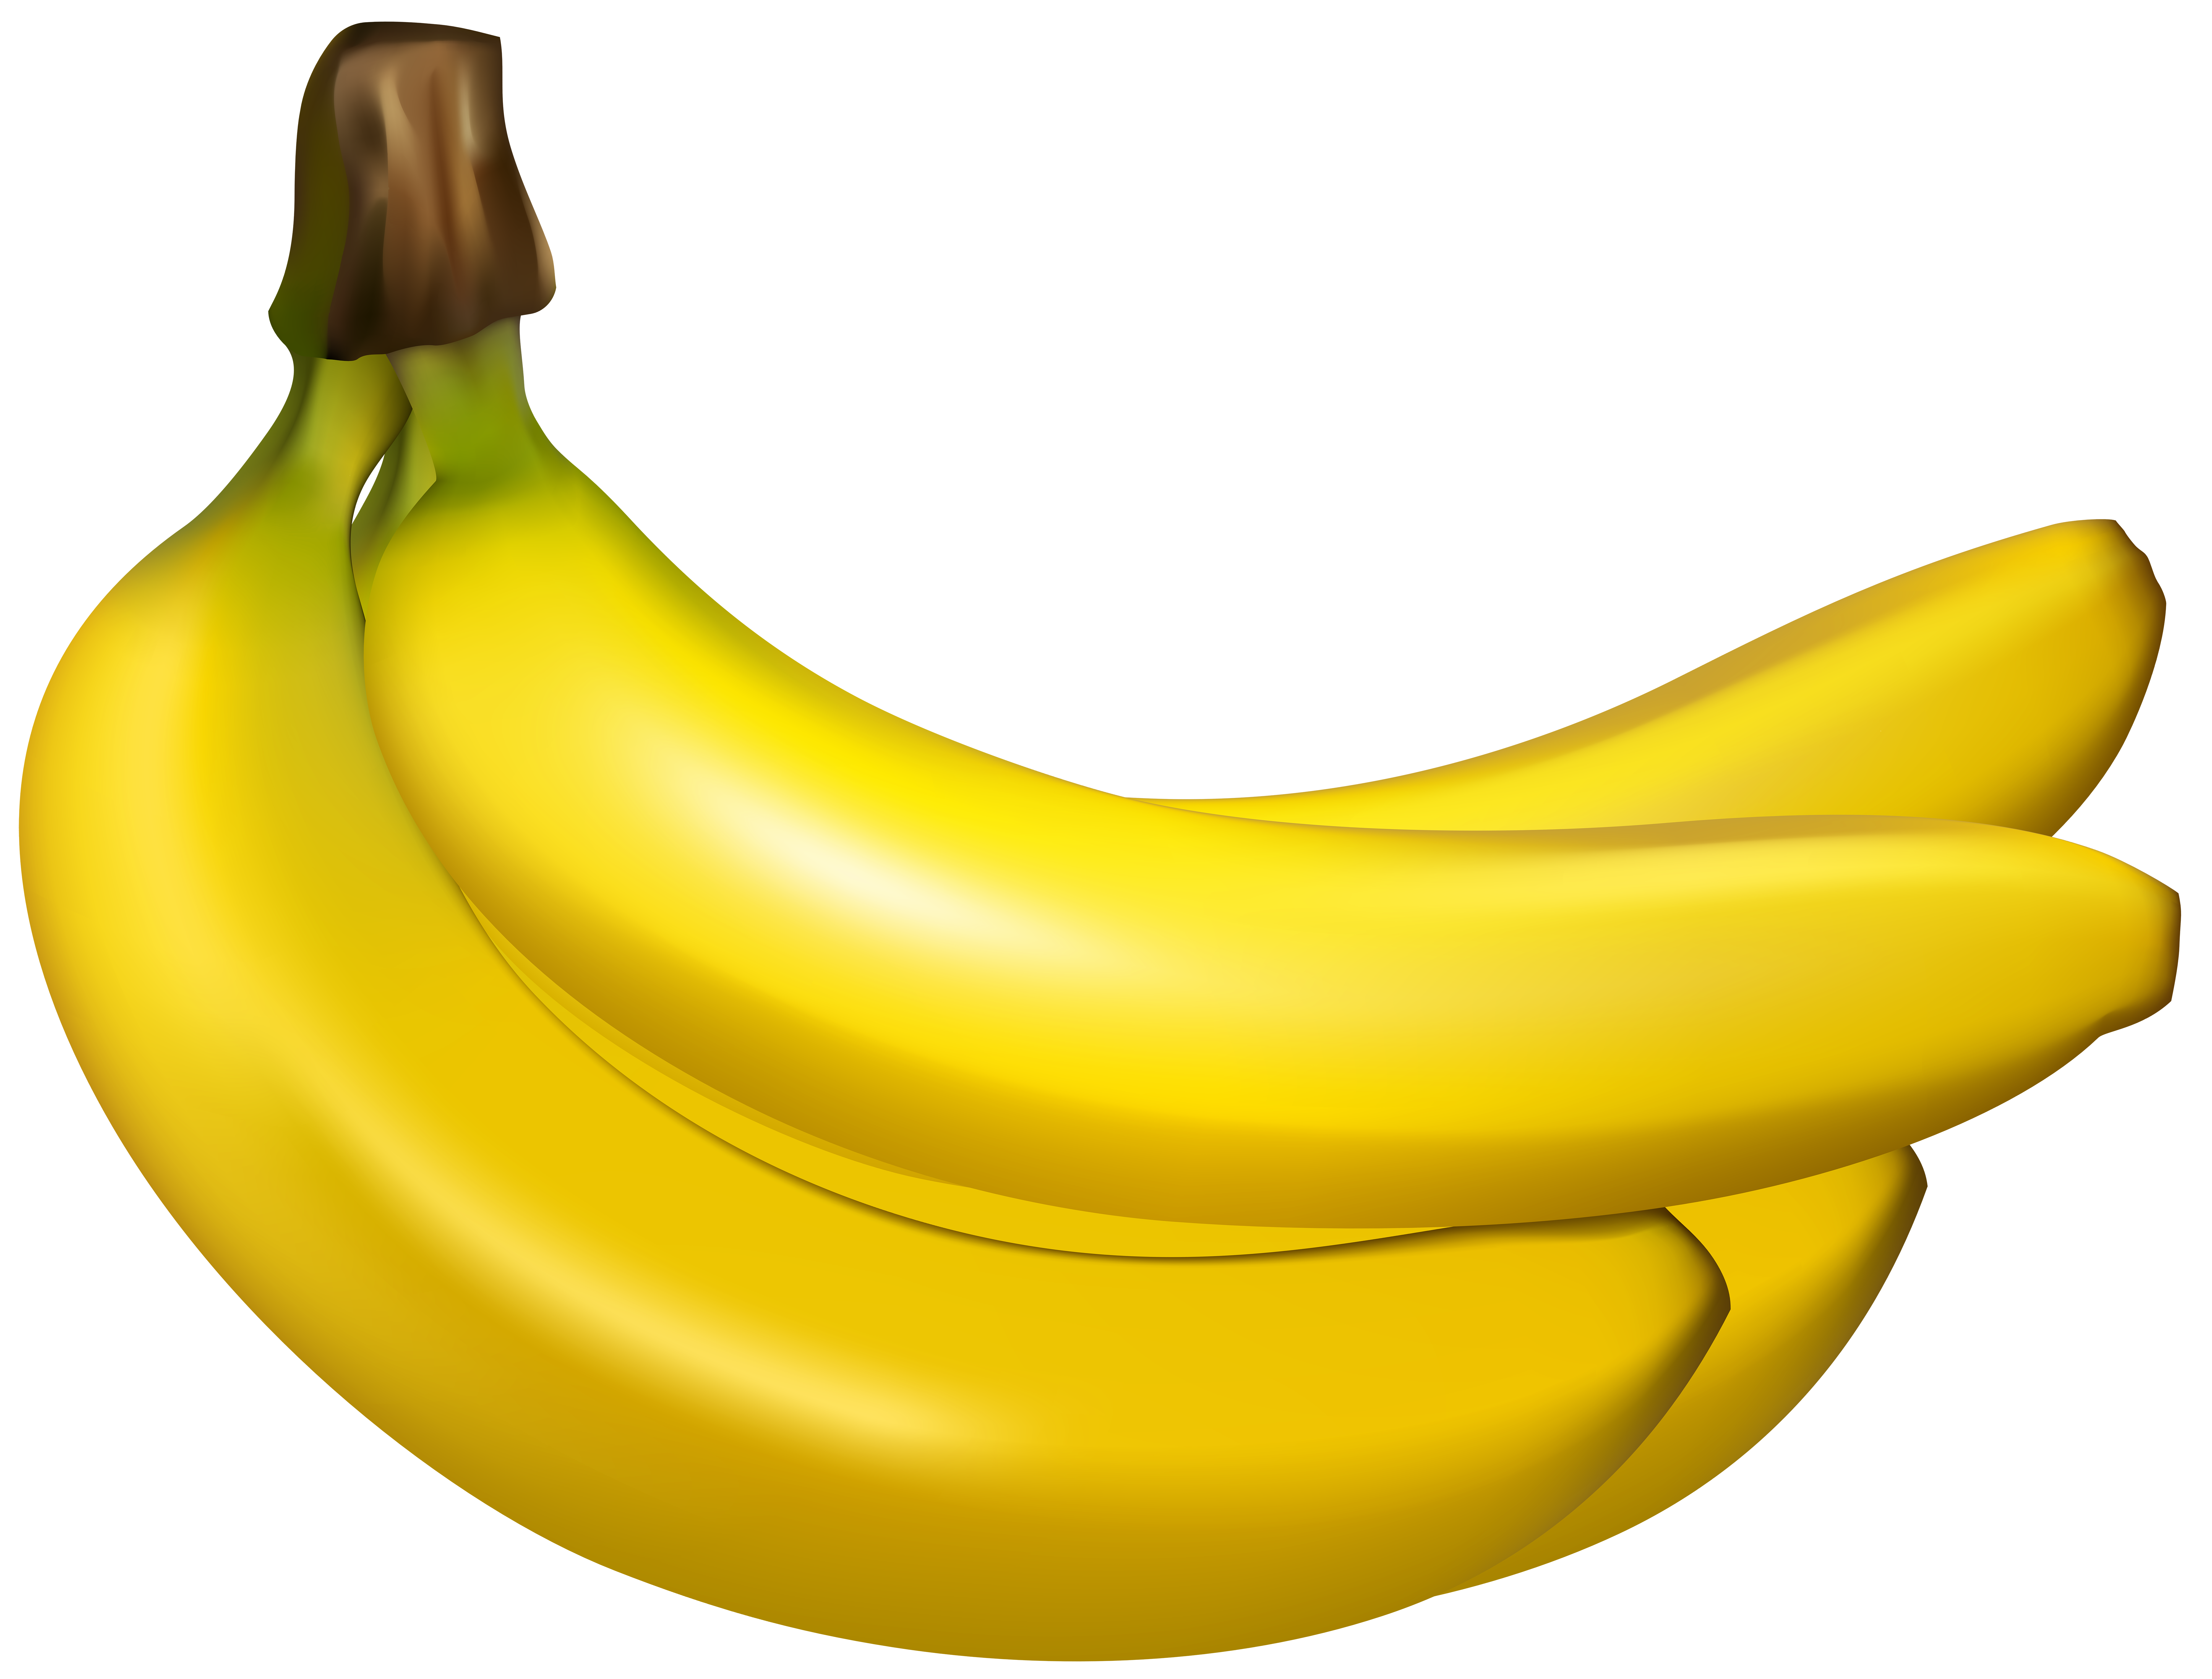 Free: Ripe banana illustration, Banana Cartoon Fruit, banana transparent  background PNG clipart 